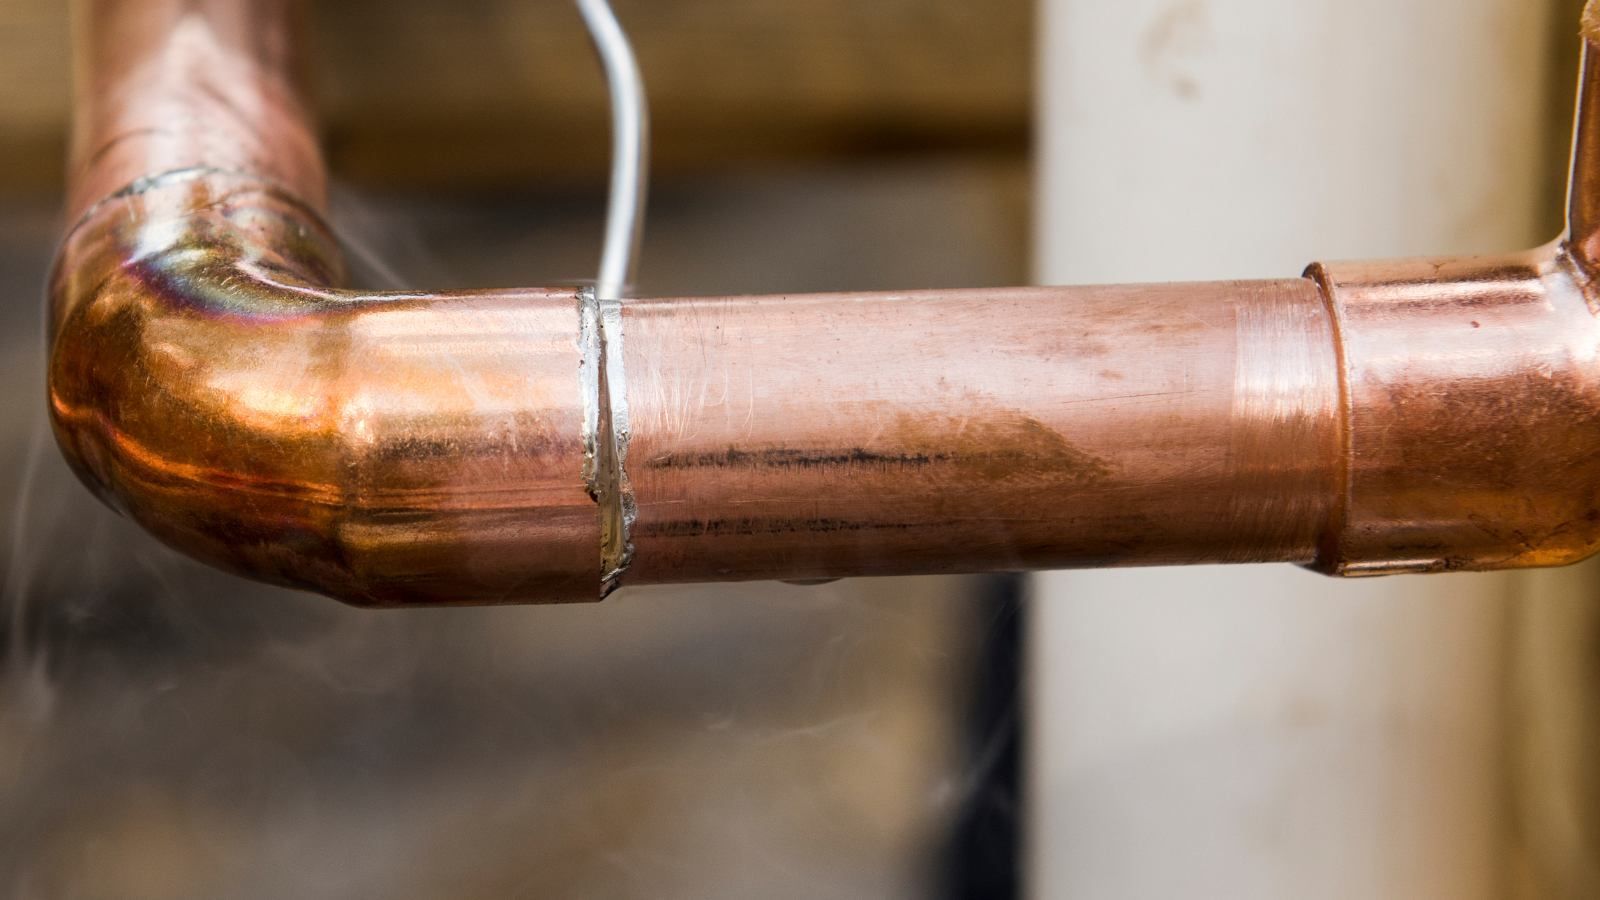 Copper Pipe With Steam